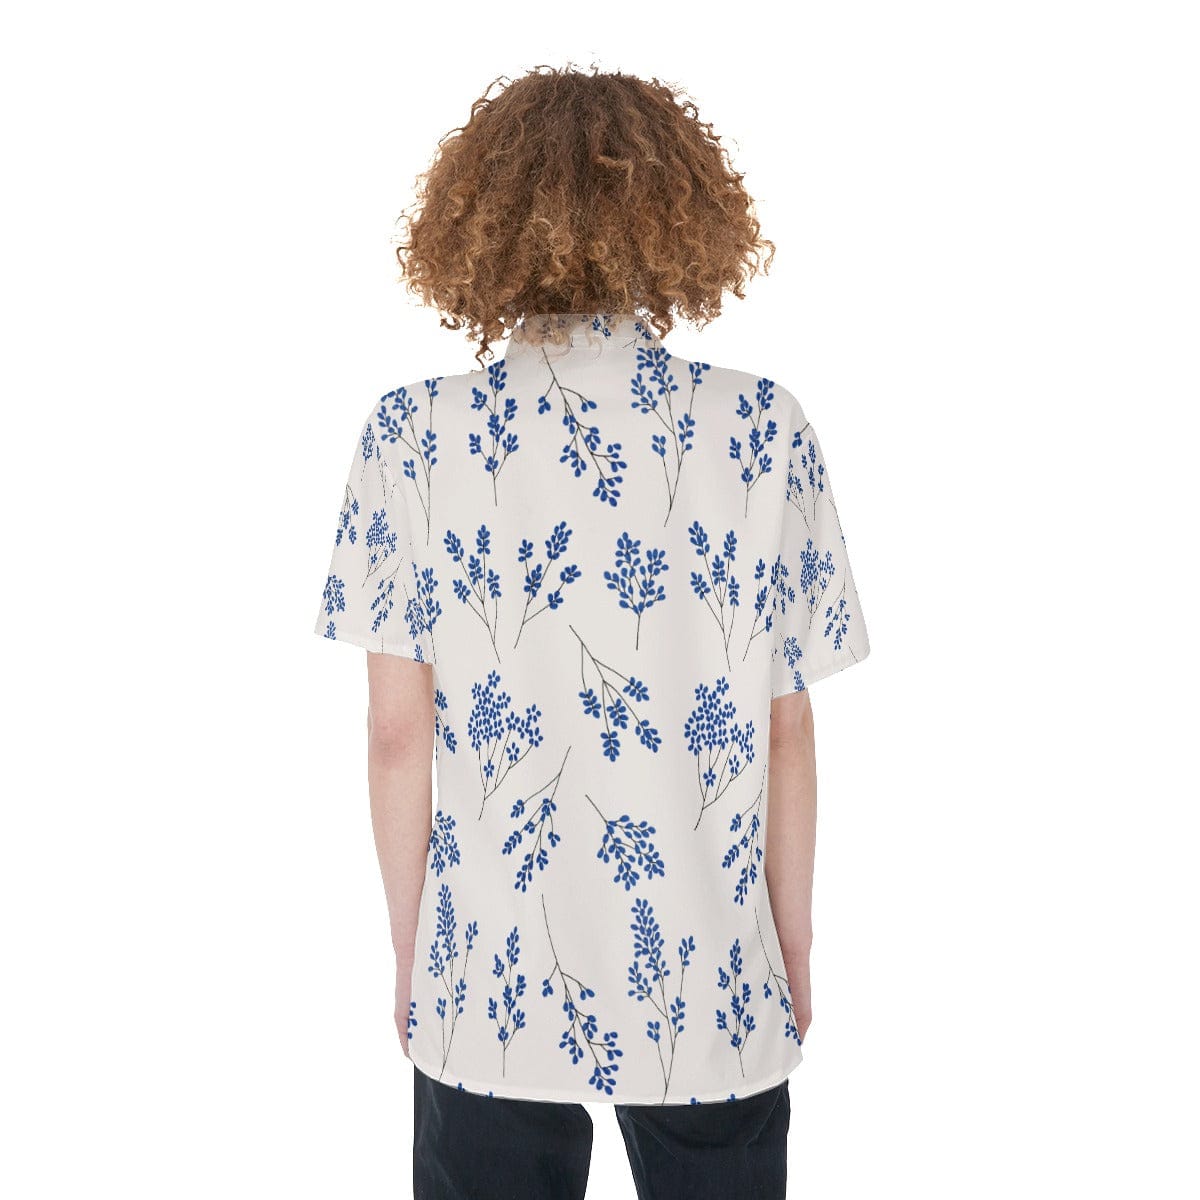 Yoycol Ecru Blue Floral Women's Short Sleeve Shirt With Pocket